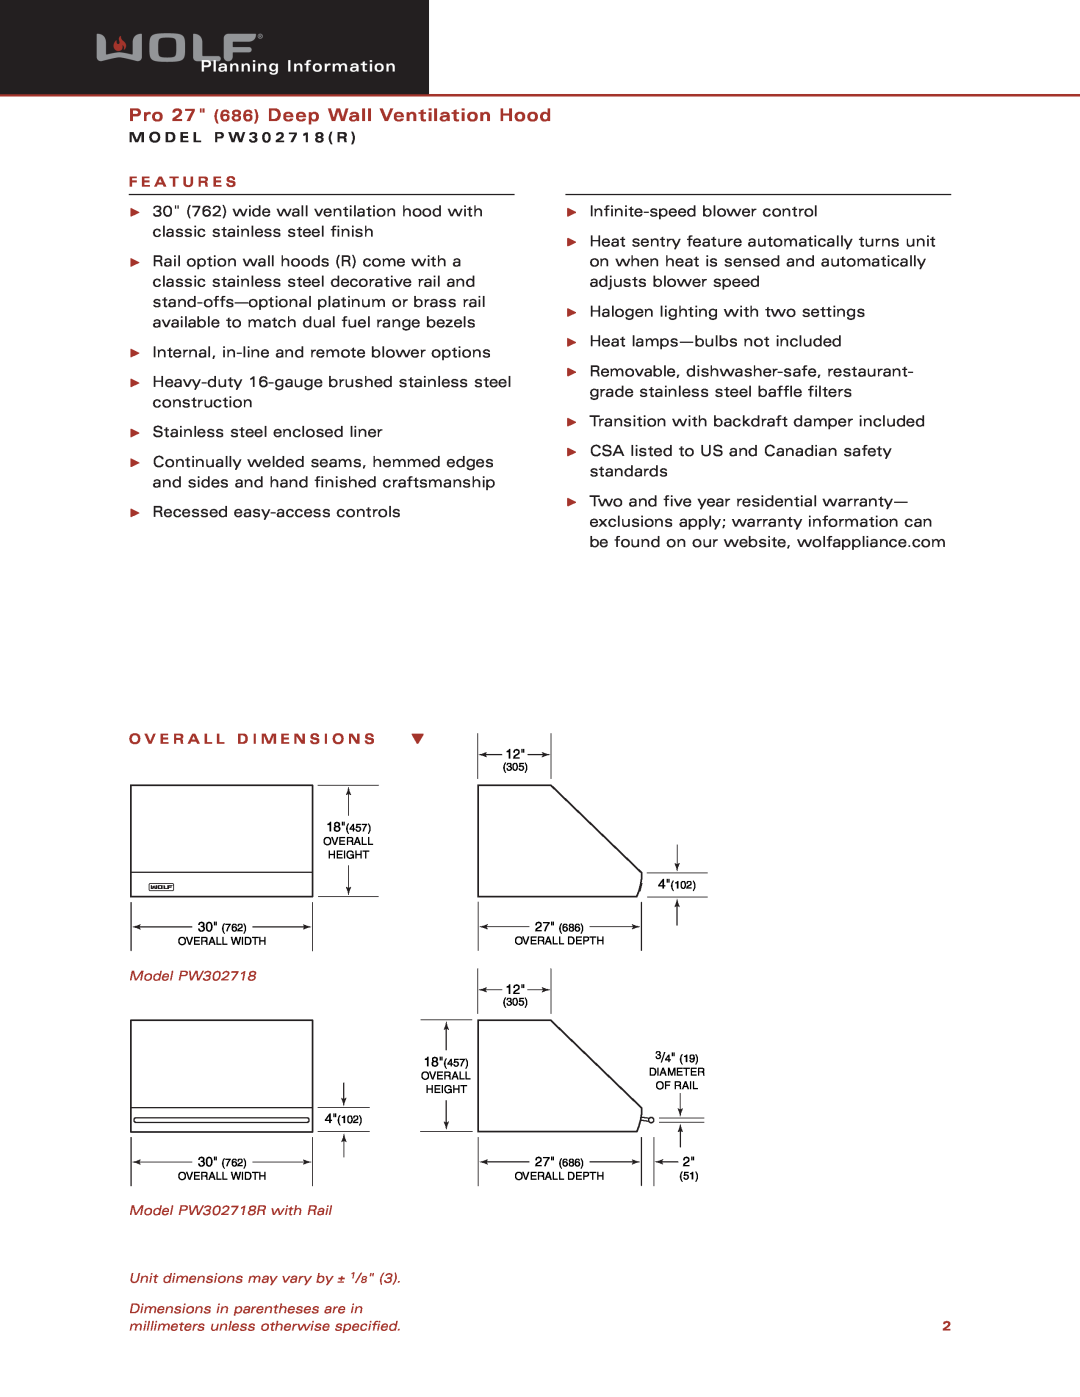 Wolf Appliance Company PW302718(R) dimensions Pro 27 686 Deep Wall Ventilation Hood, Planning Information, F E A T U R E S 